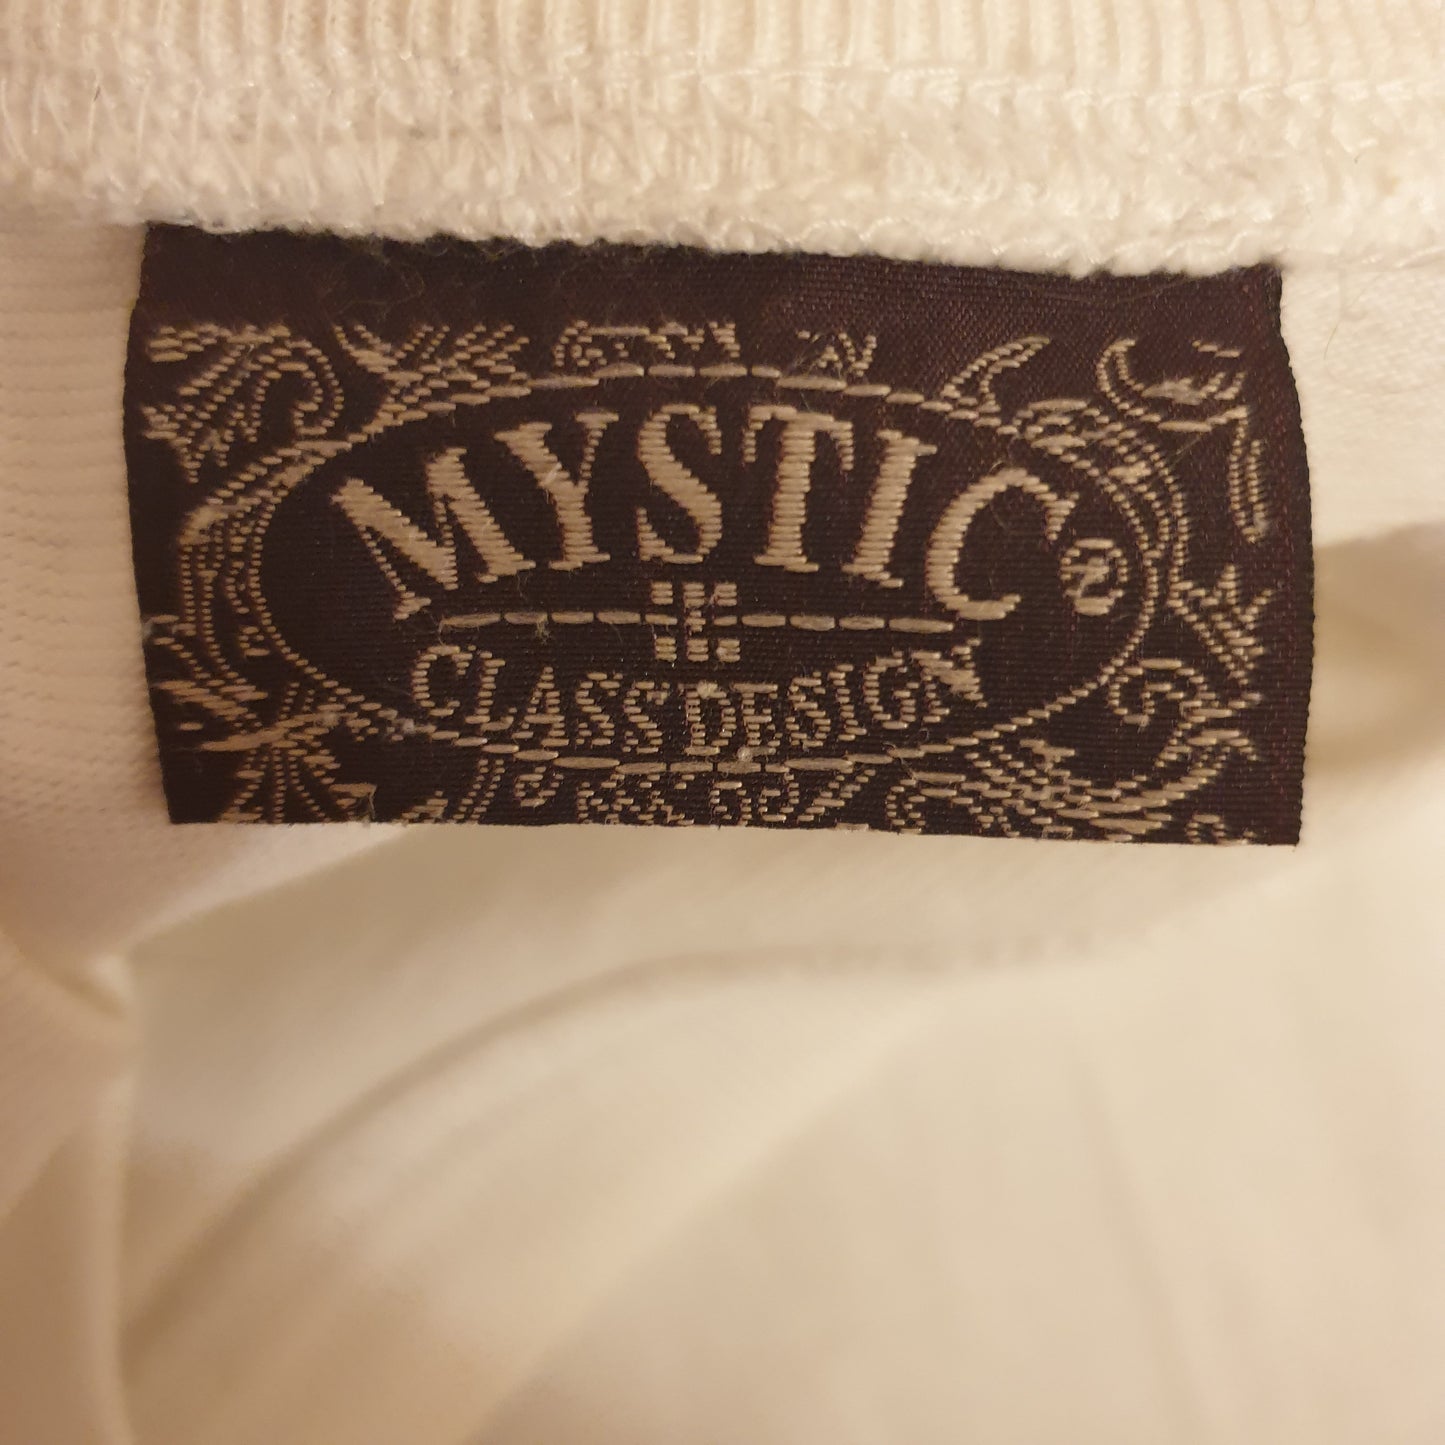 Mystic Cow T-Shirt XXL